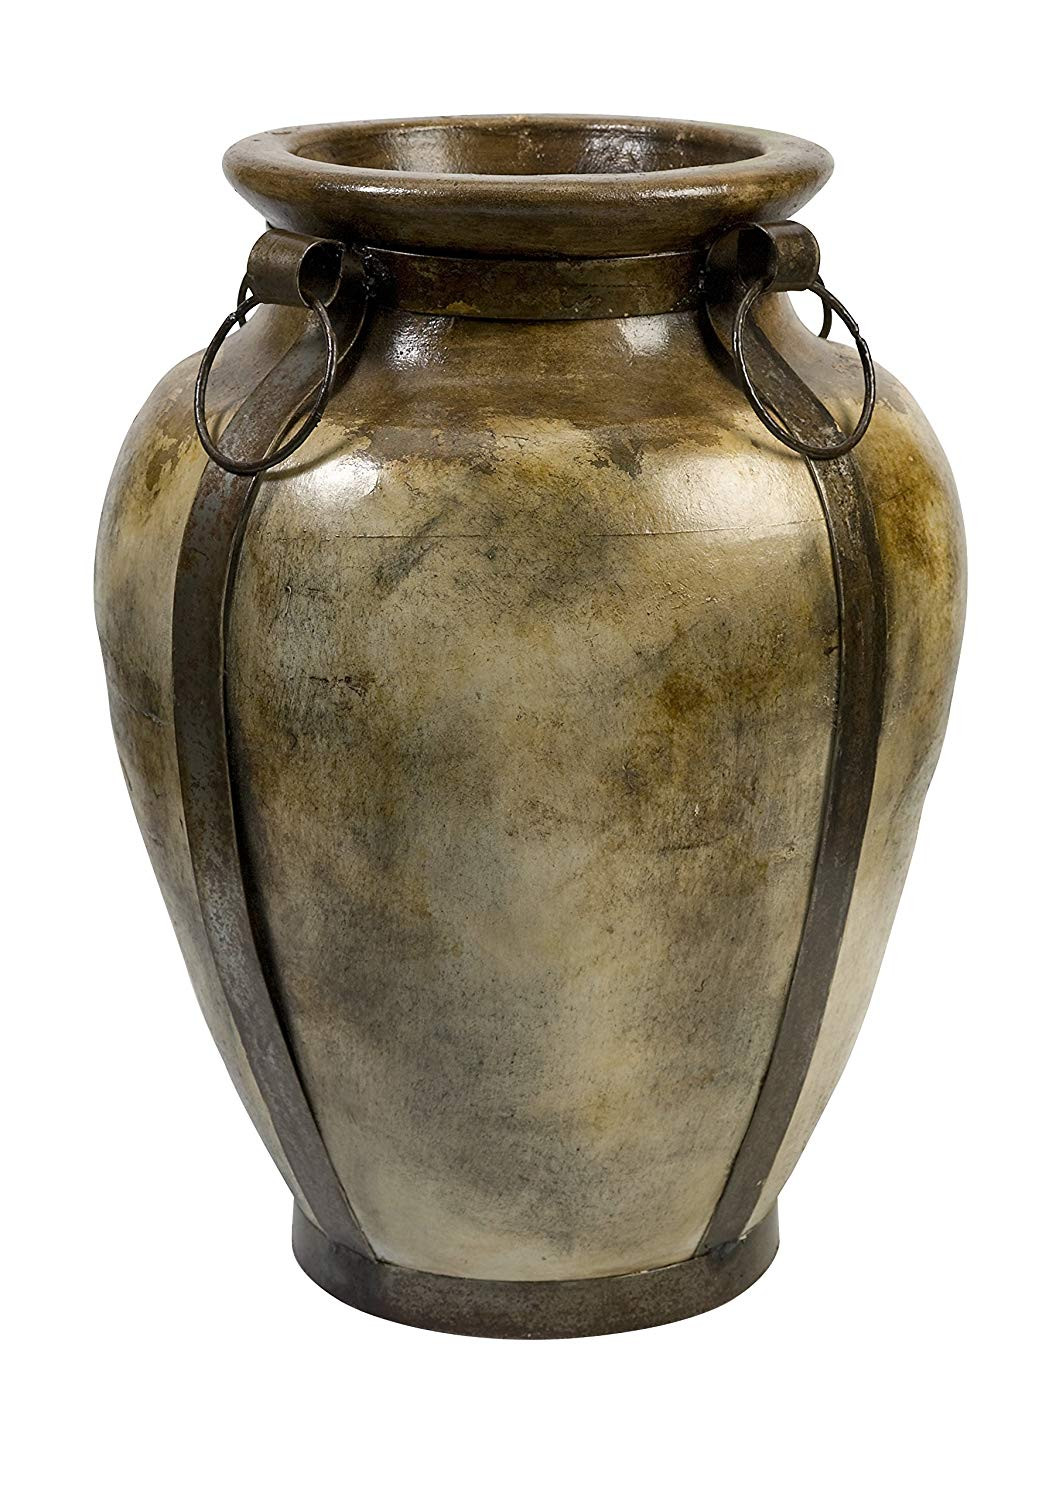 13 Stylish Terracotta Clay Vase 2024 free download terracotta clay vase of amazon com imax 20121 arden terracotta iron planter home kitchen pertaining to 91odklokmhl sl1500